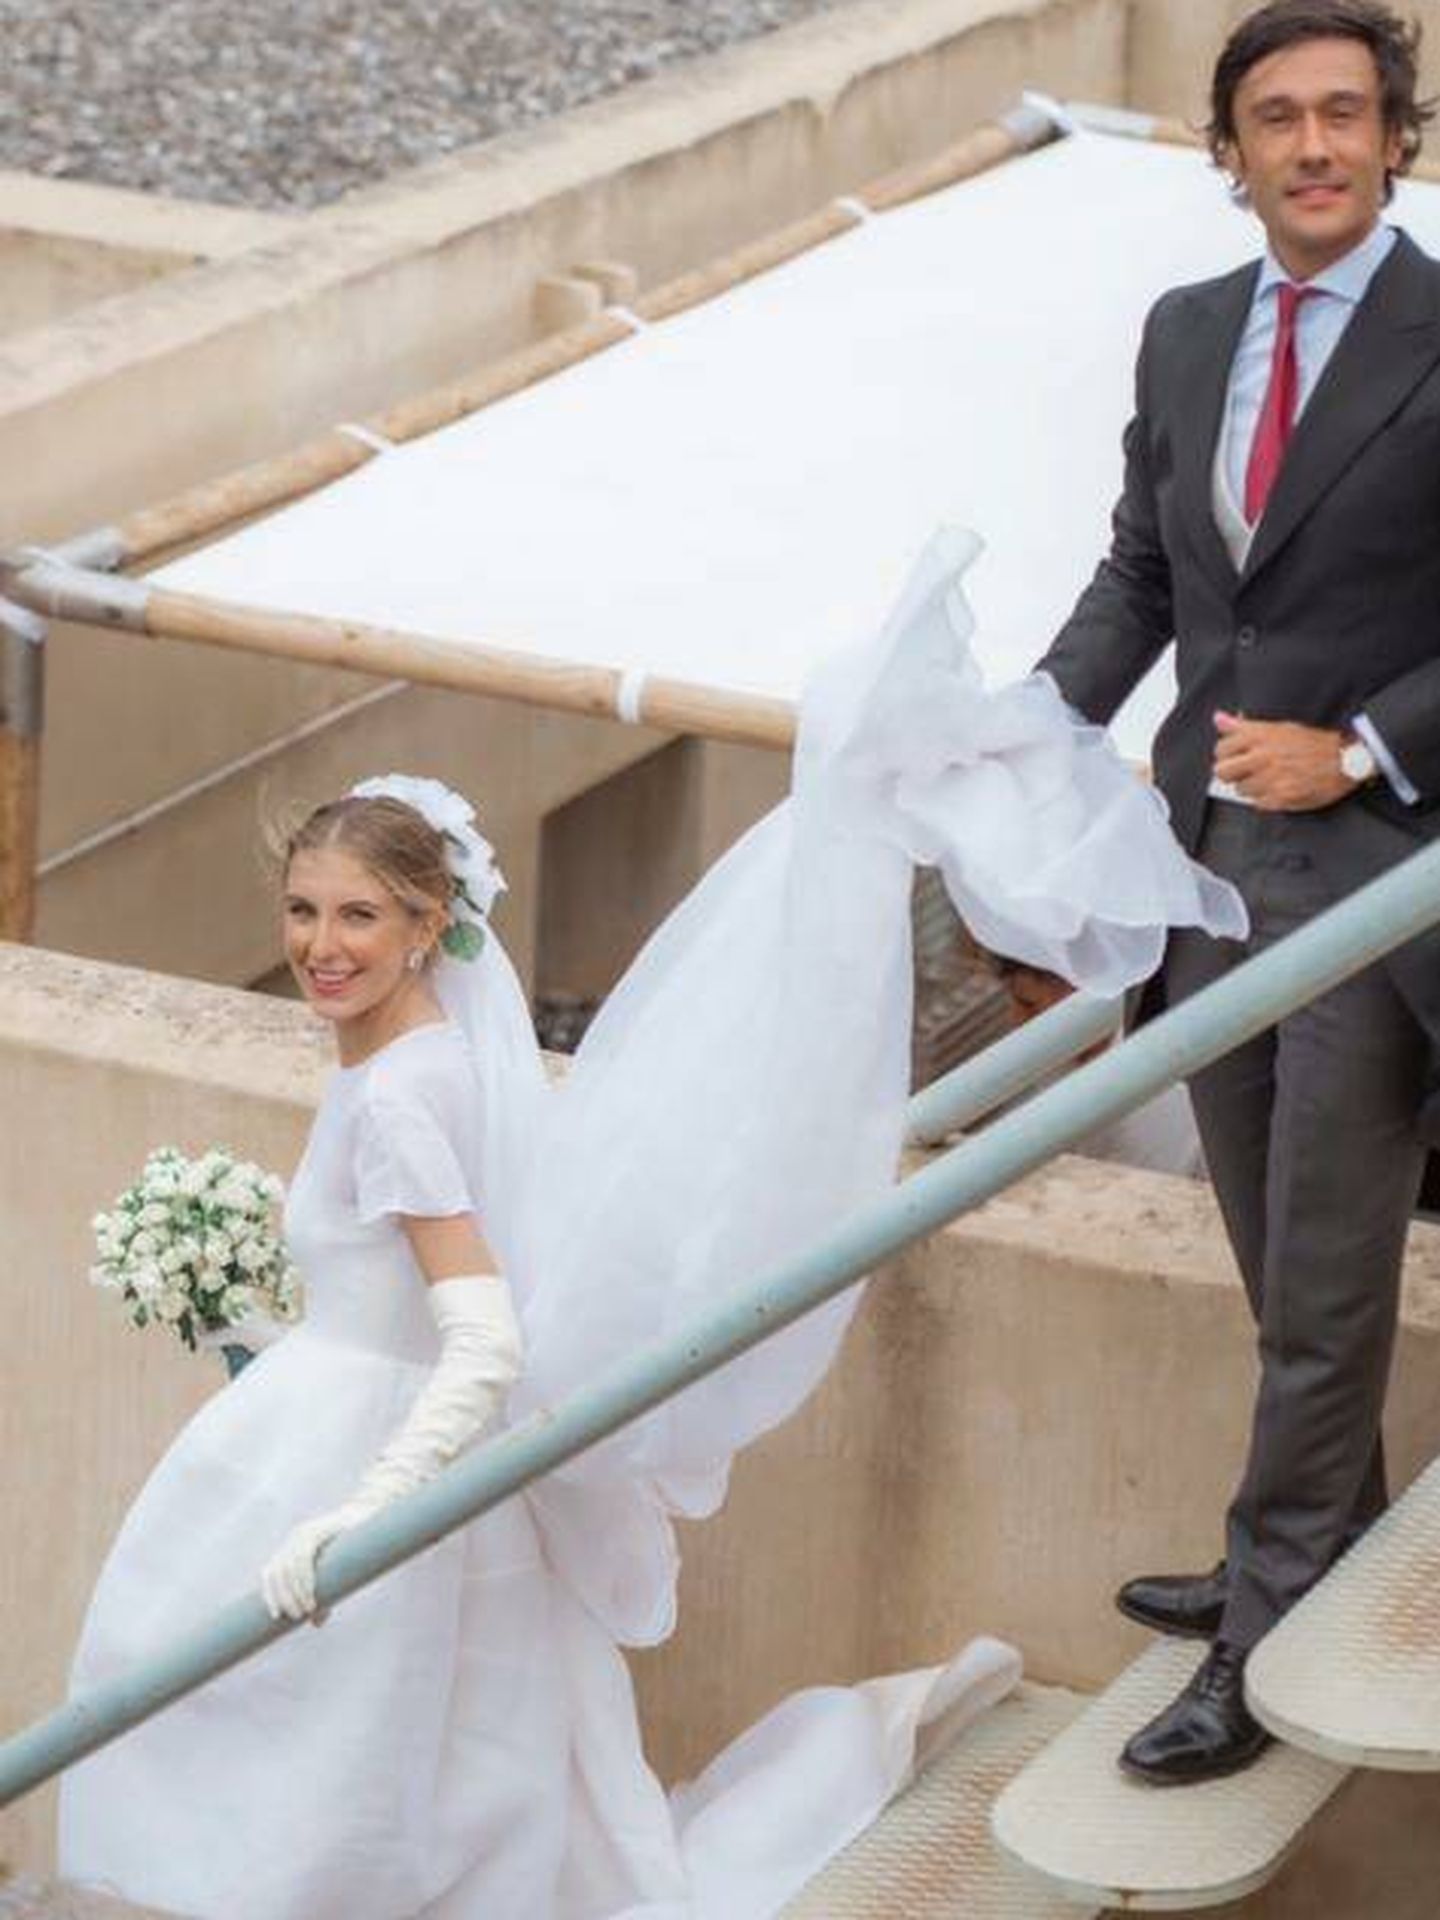 La boda de Luisa Bergel y Cristian Flórez. (Instagram/@mylu___)